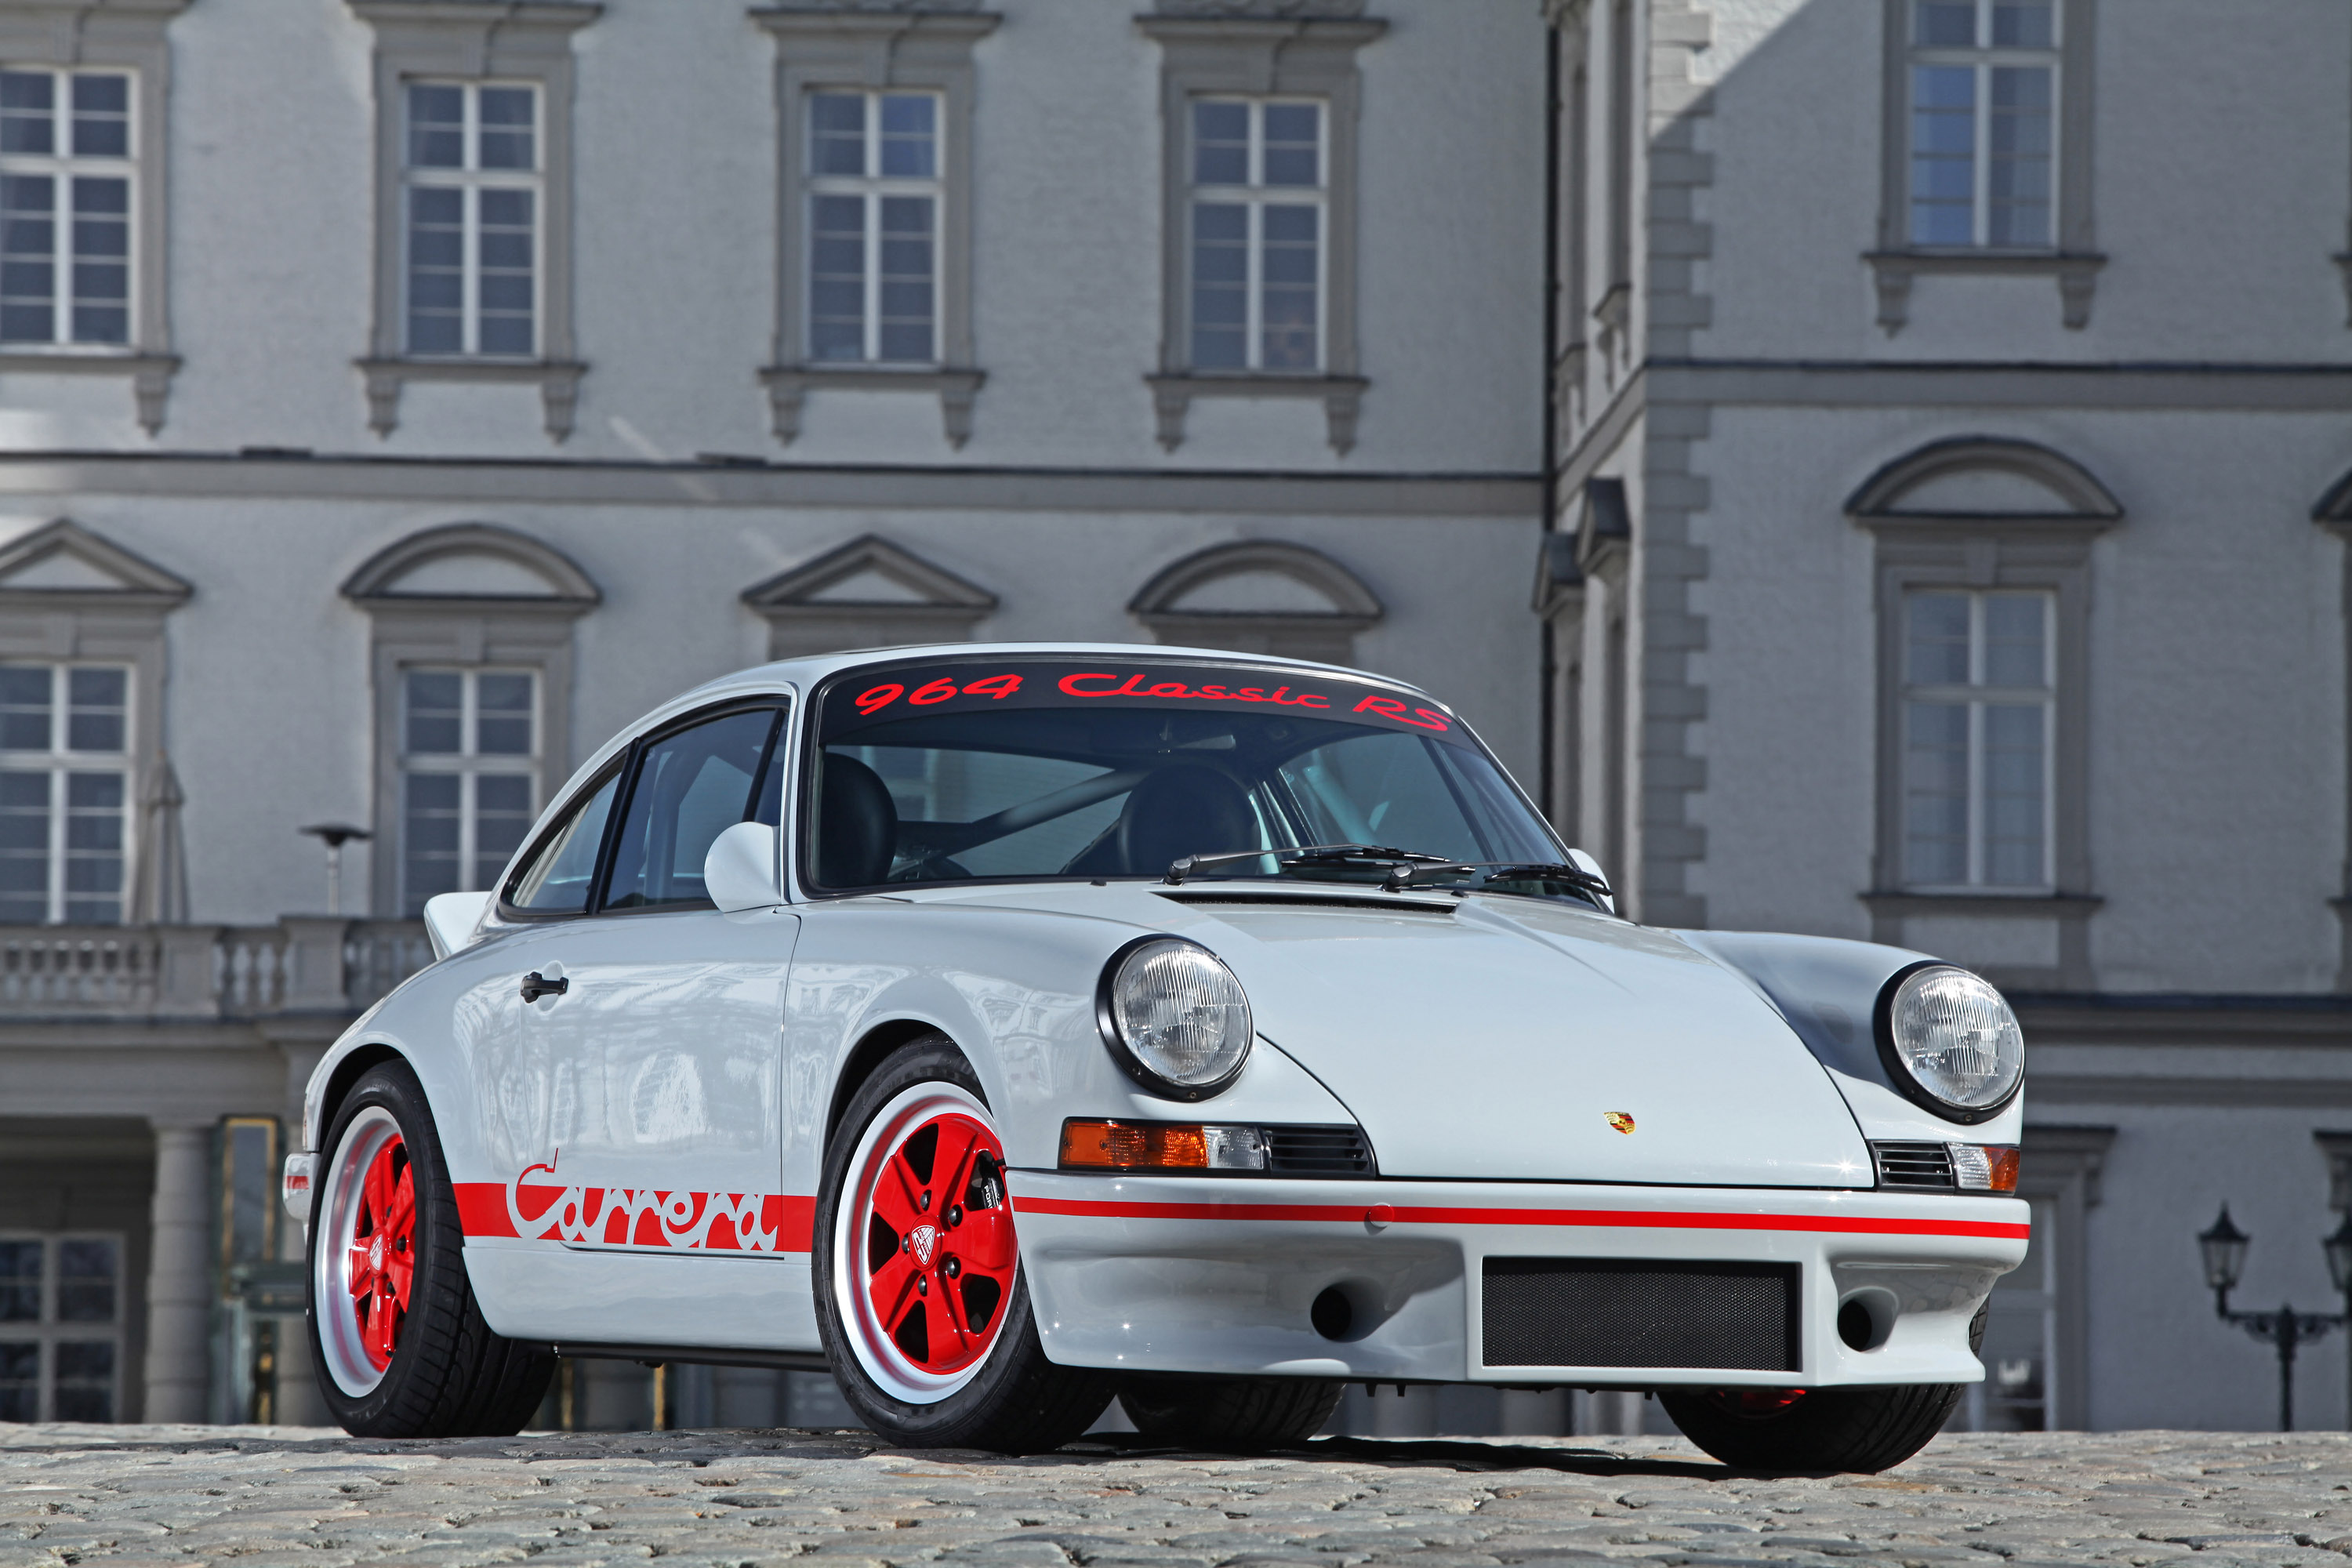 Porsche 911 Carrera Rs Wallpapers